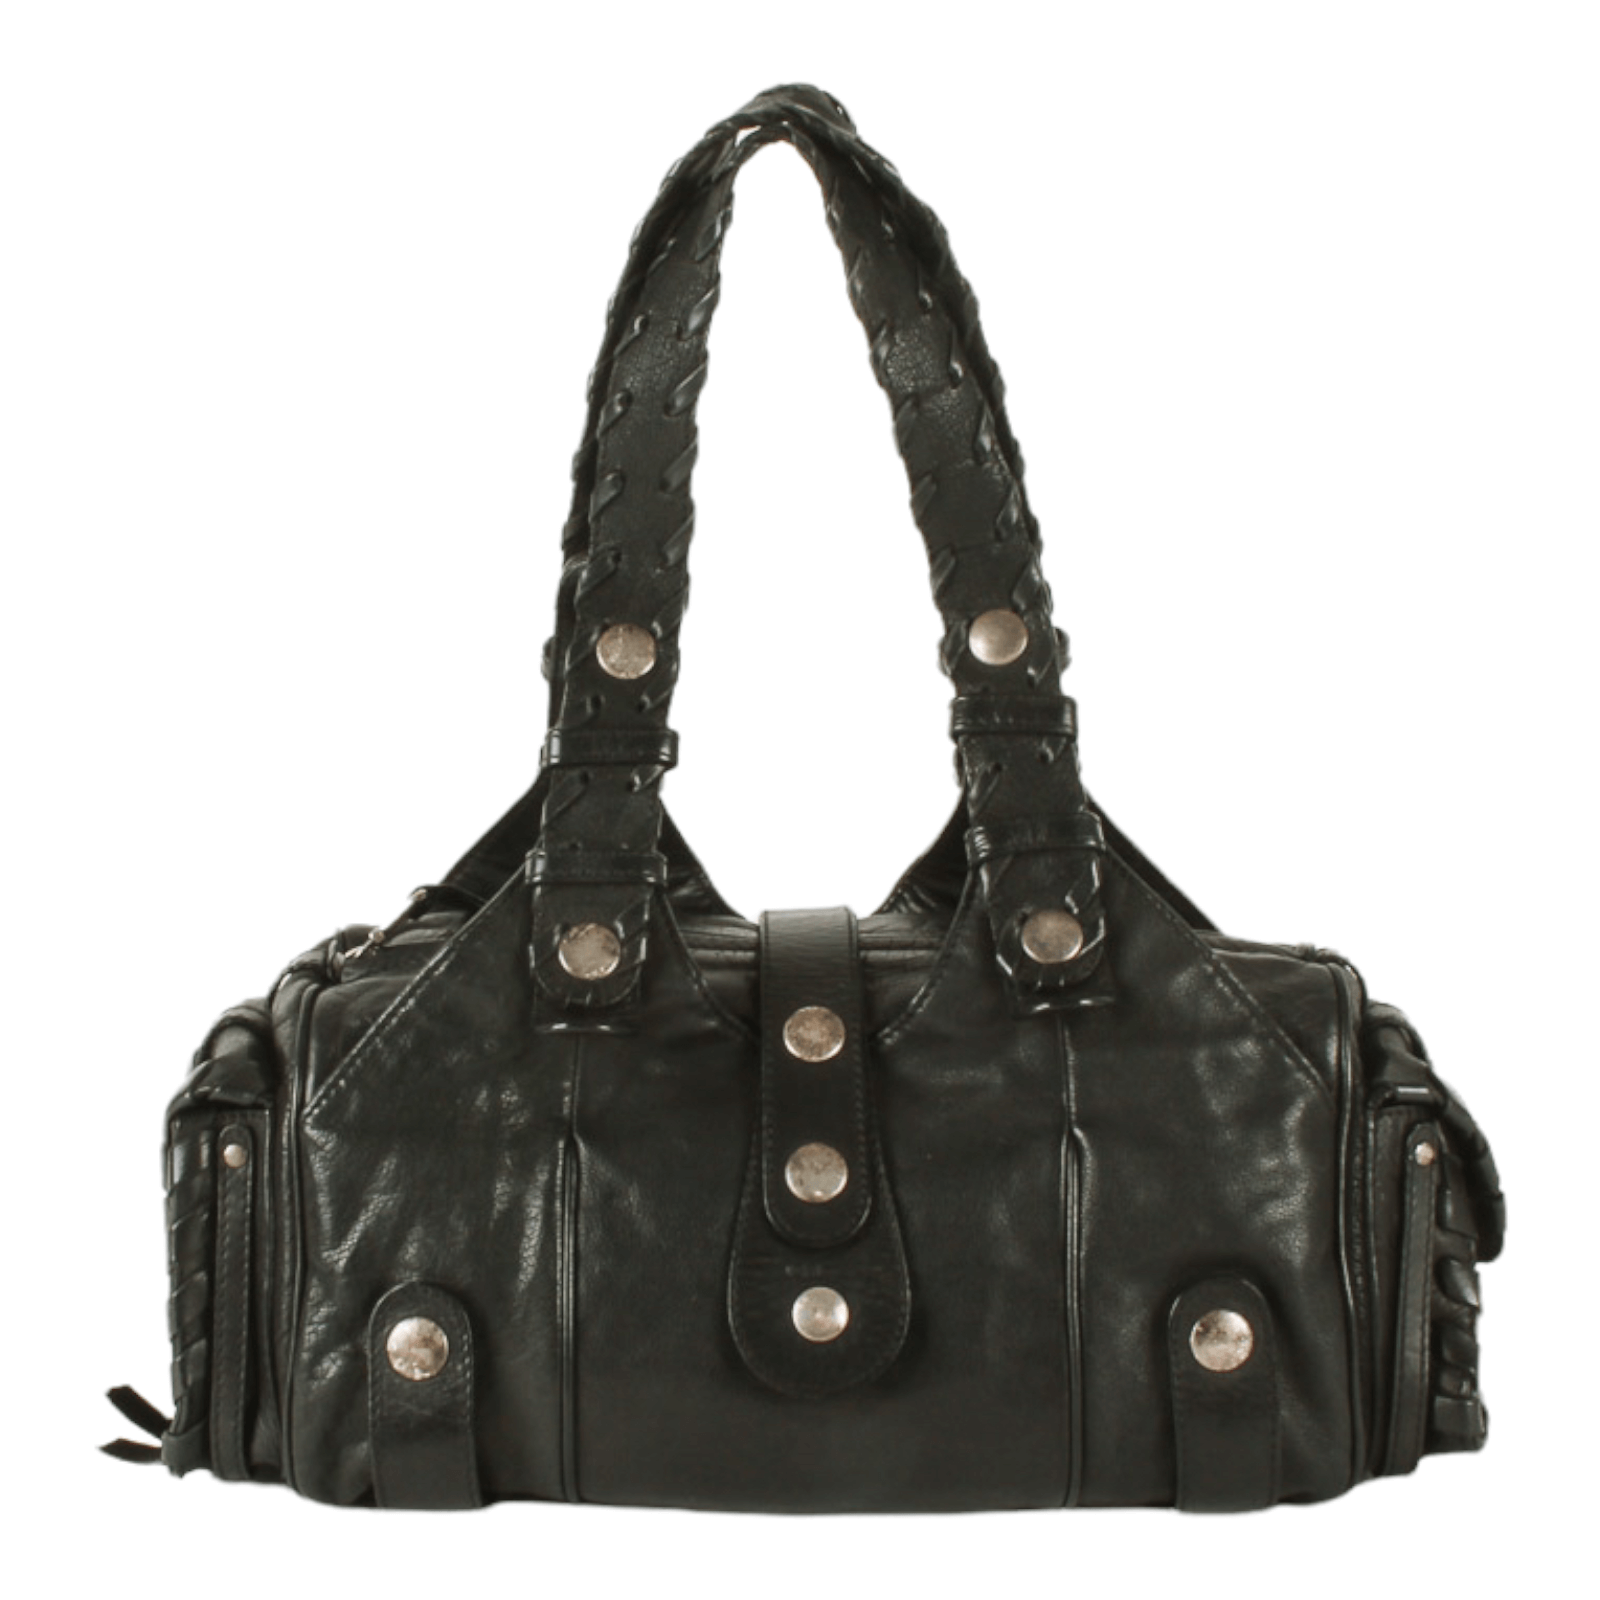 Authentic Chloe black leather Satchel Shoulder/Hand bag